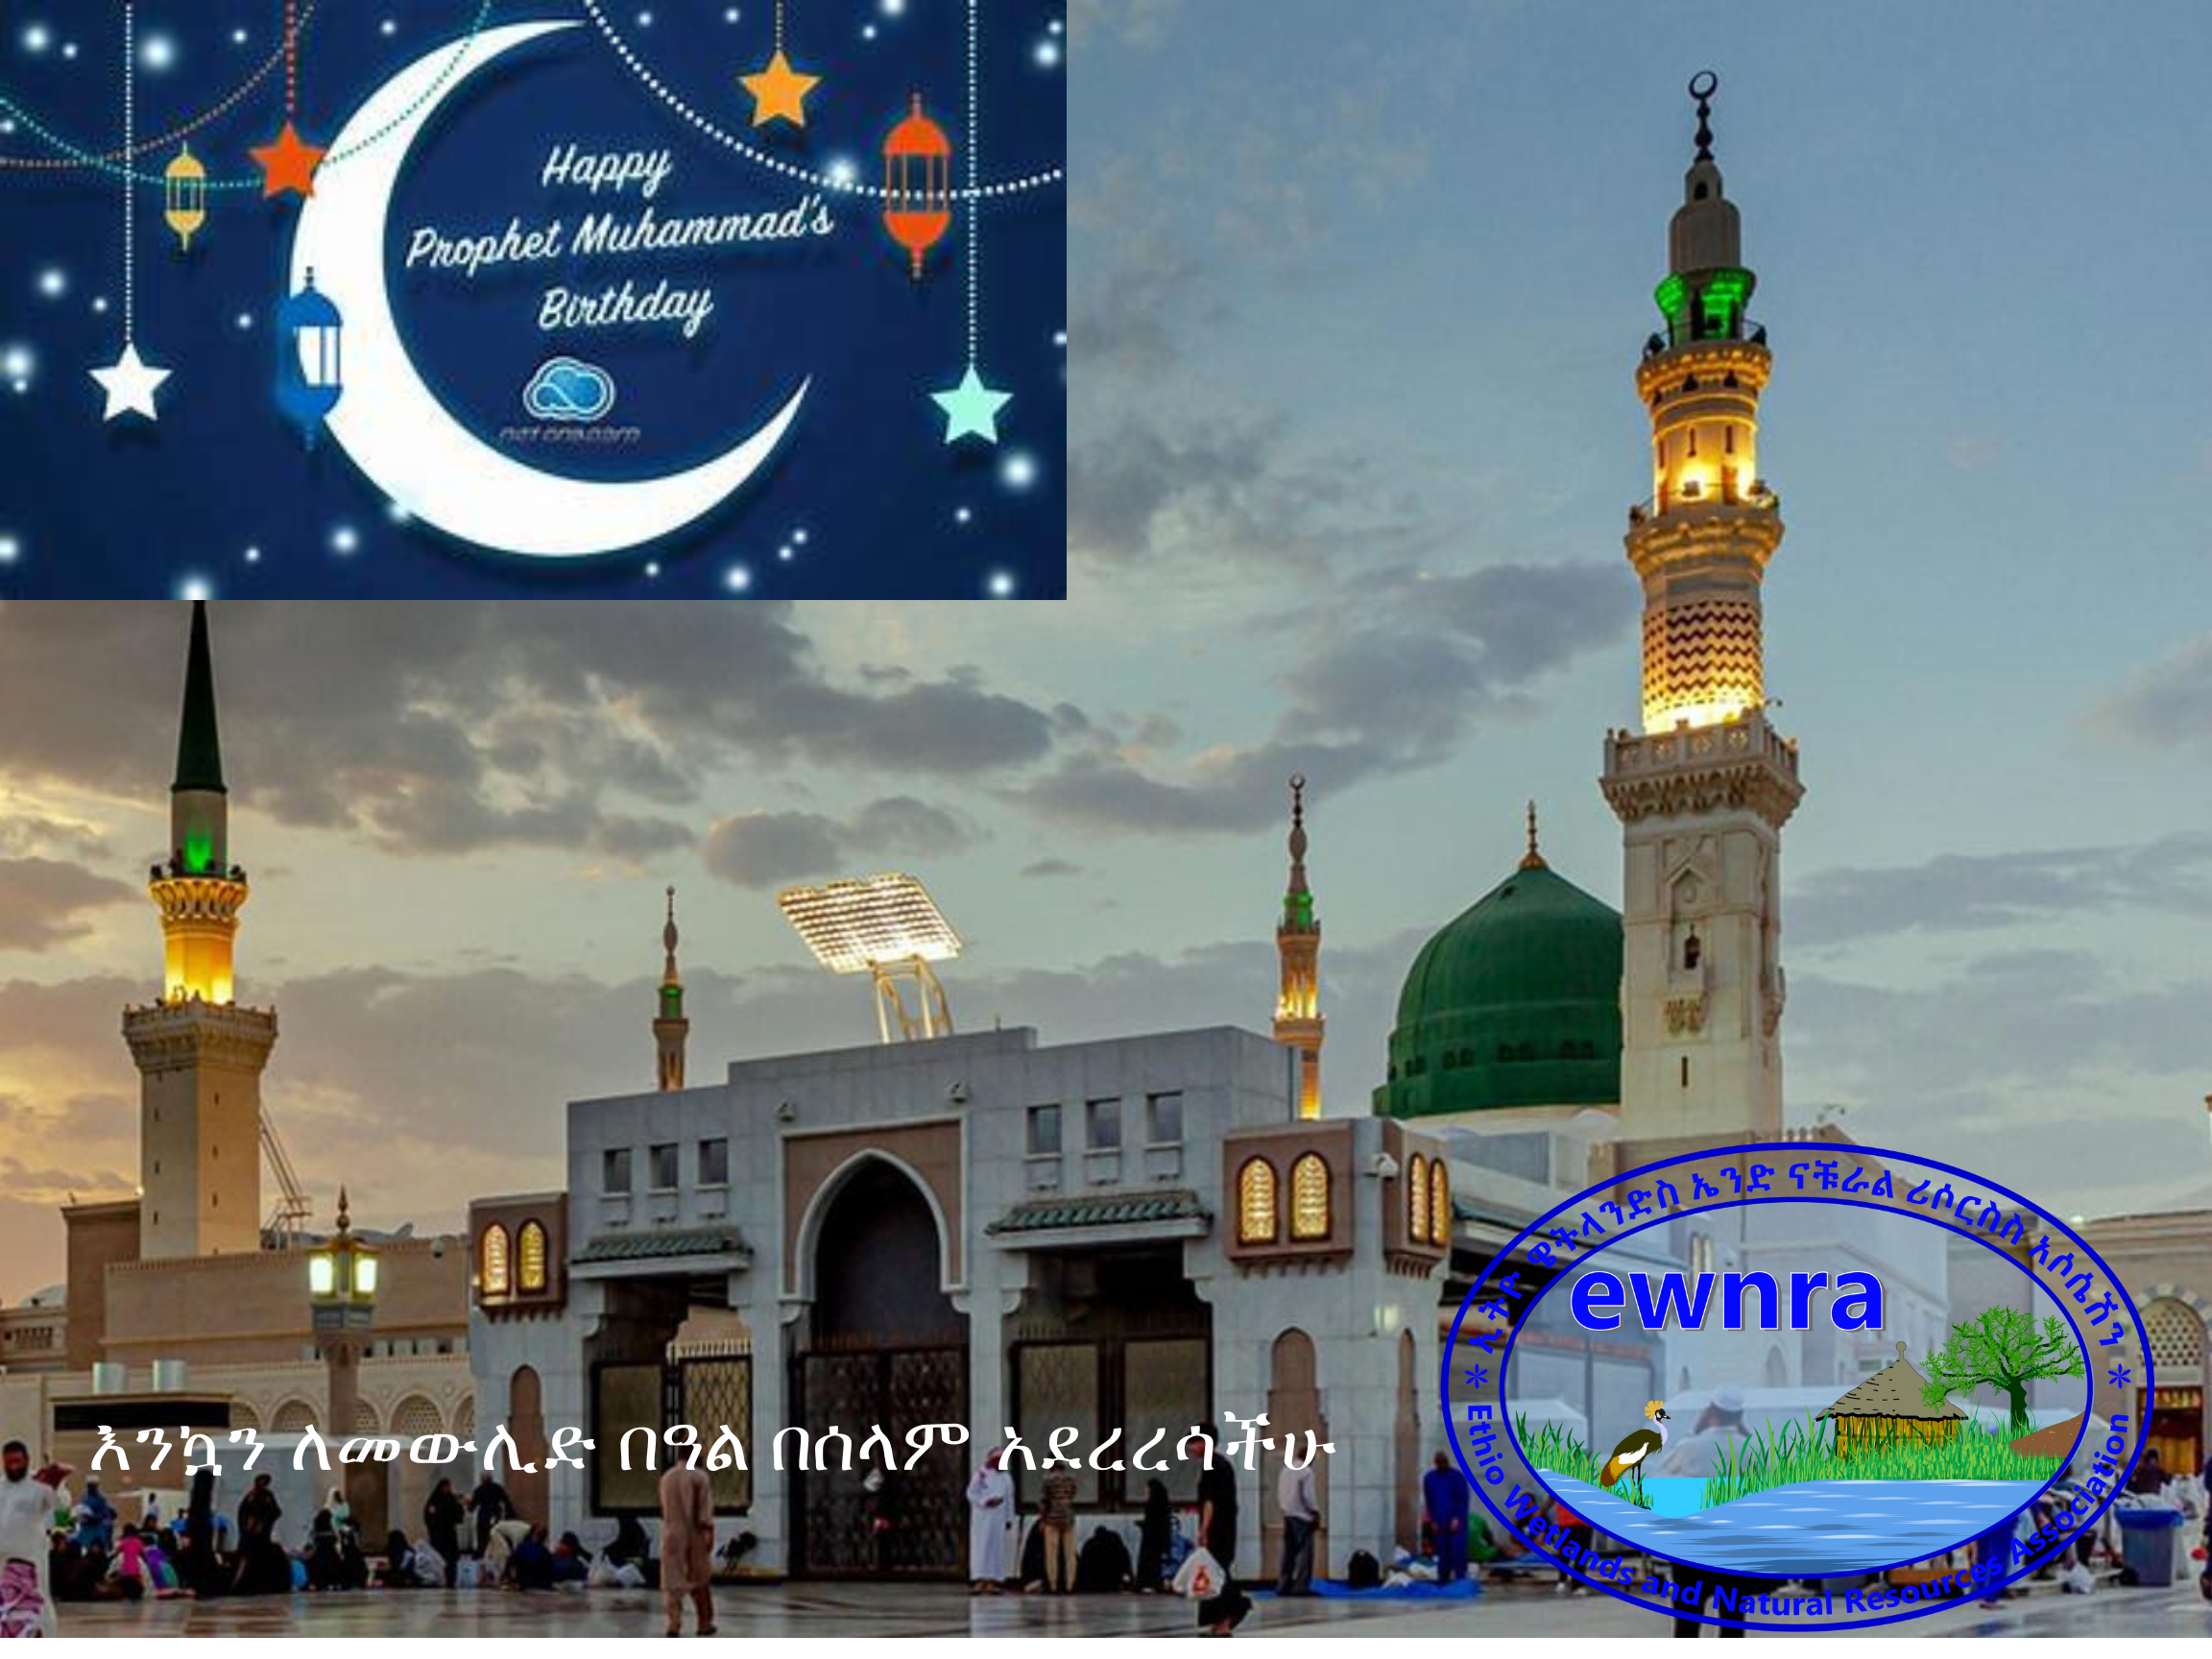 Read more about the article Ethio Wetlands and Natural Resources association (EWNRA) wishes all Muslims a happy holiday of Mawlid!ኢትዮ ዌትላንድስ ኤንድ ናቹራል ሪሶርስ አሶሴሽን ለመላው የእስልምና እምነት ተከታዮች በሙሉ መልካም የመውሊድ በዓል እንዲሆንላችሁ ይመኛል፡፡